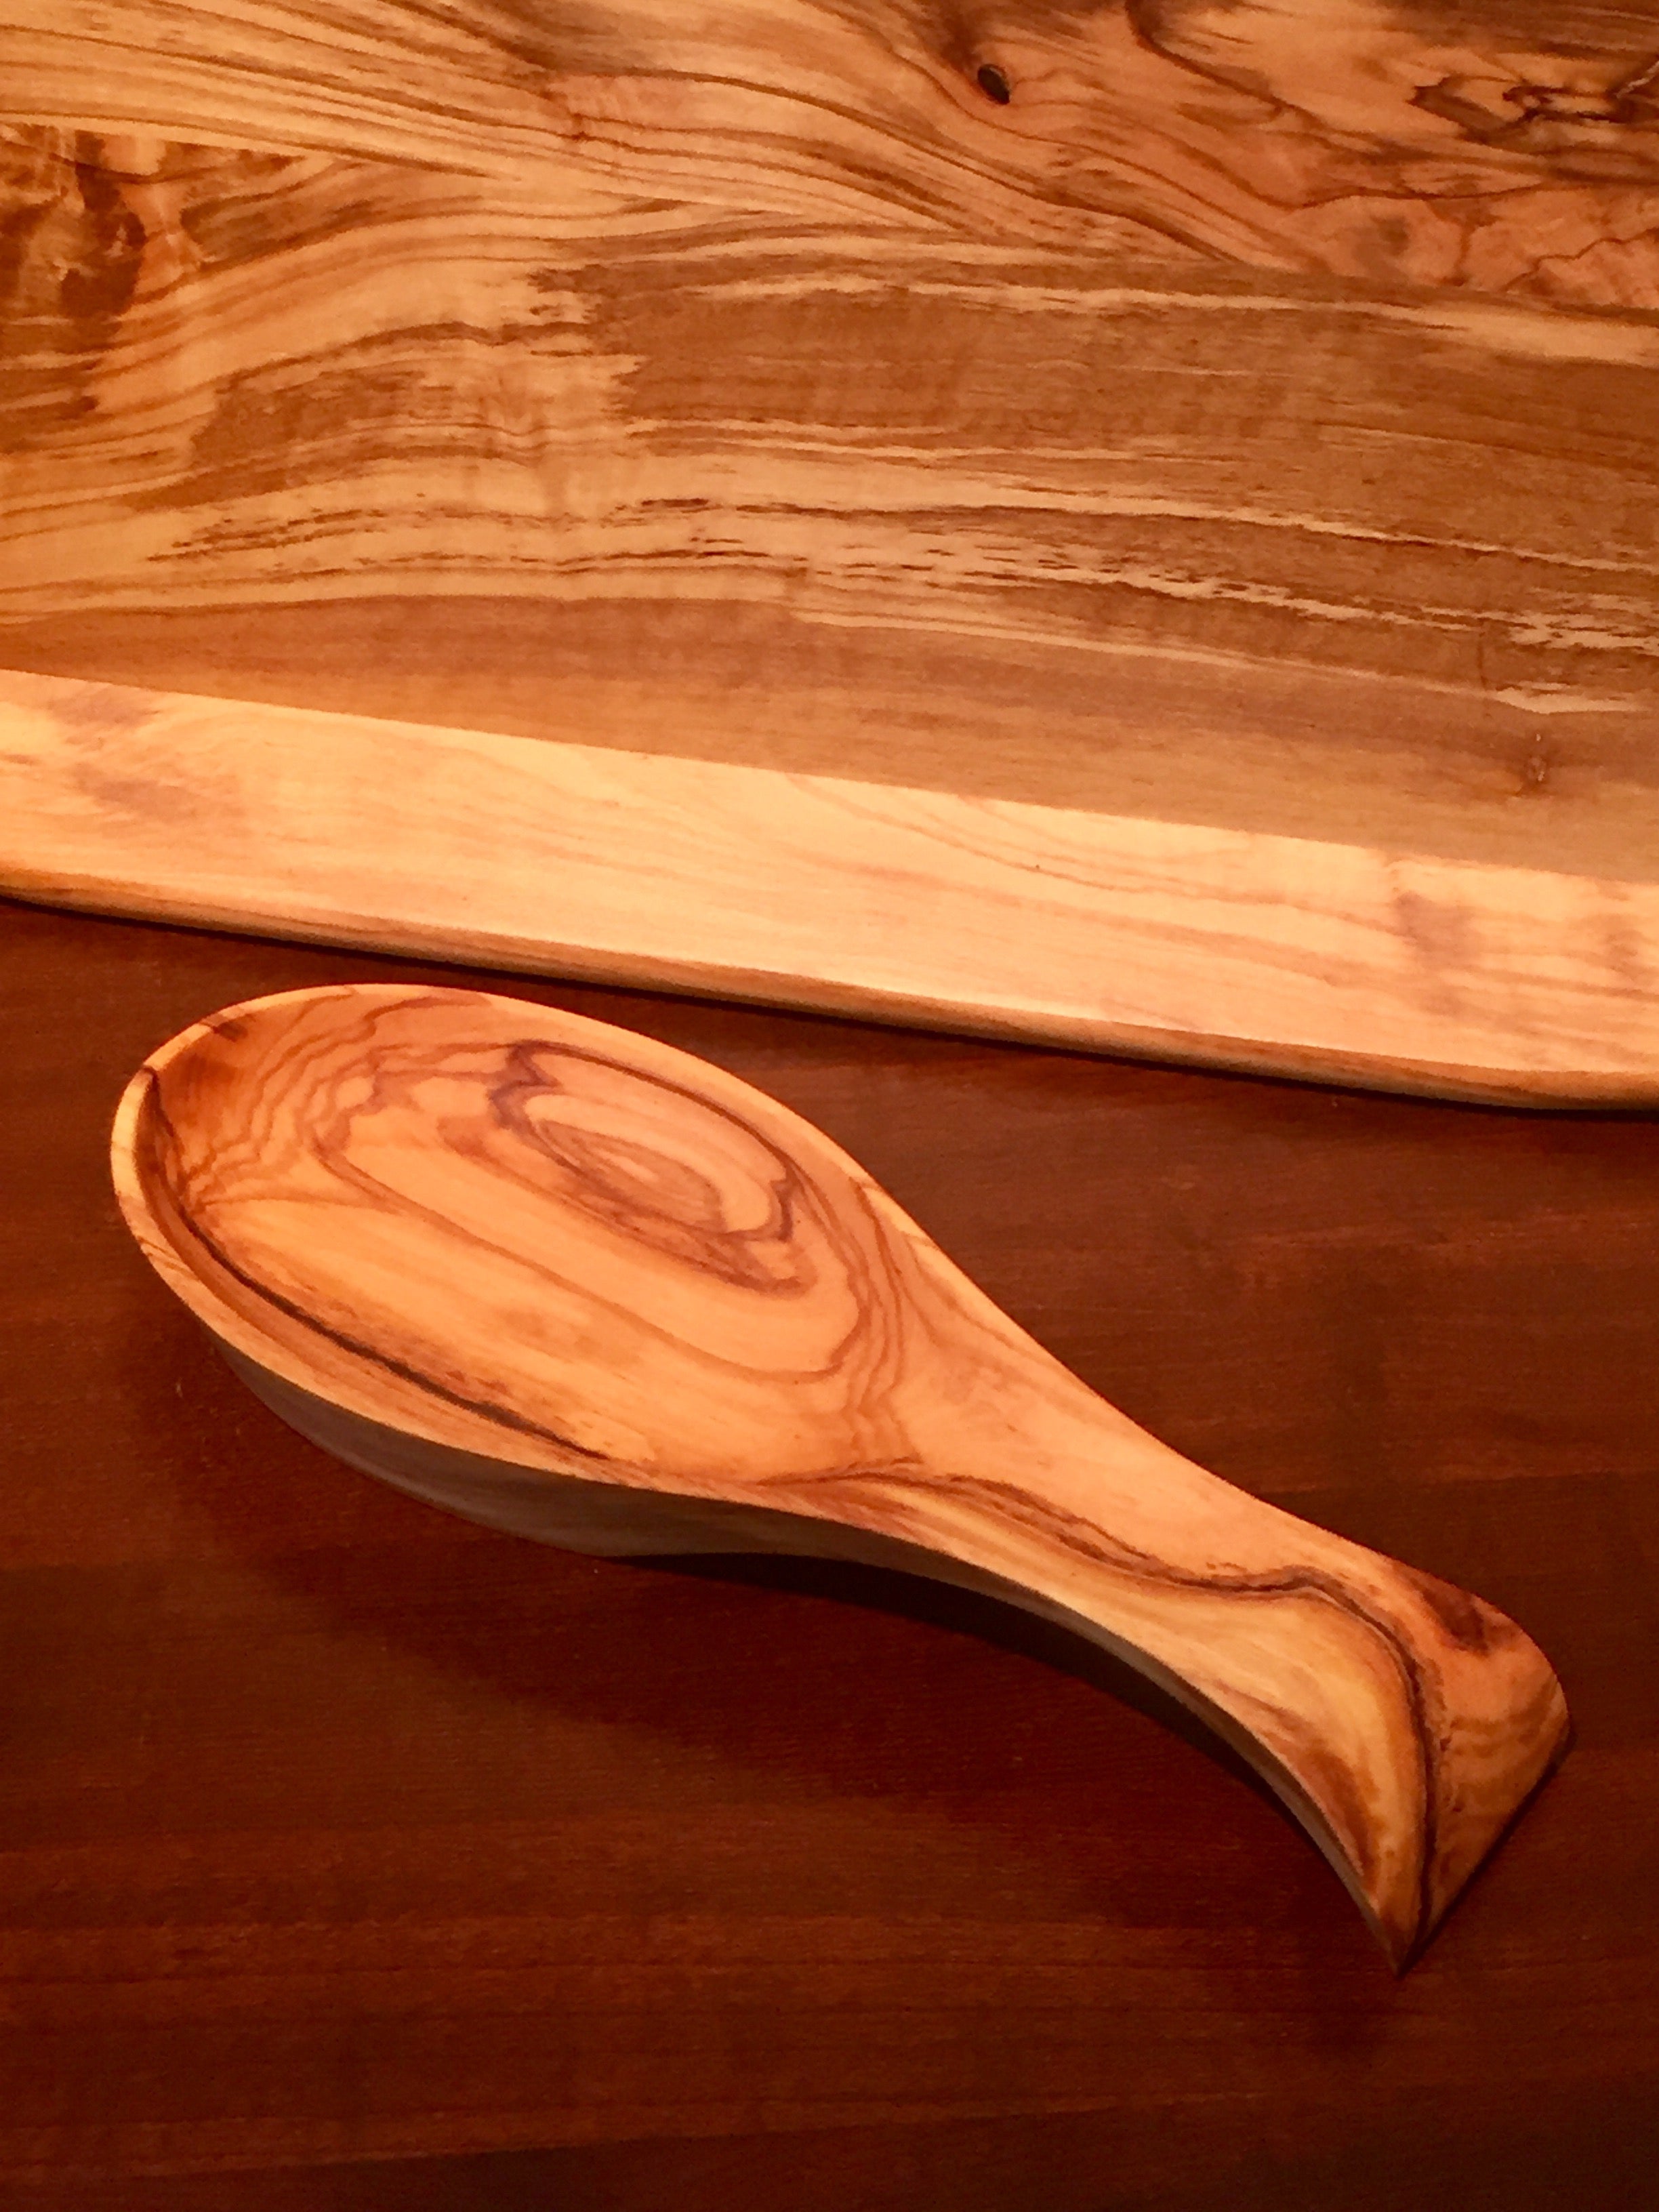 wooden spoon rest